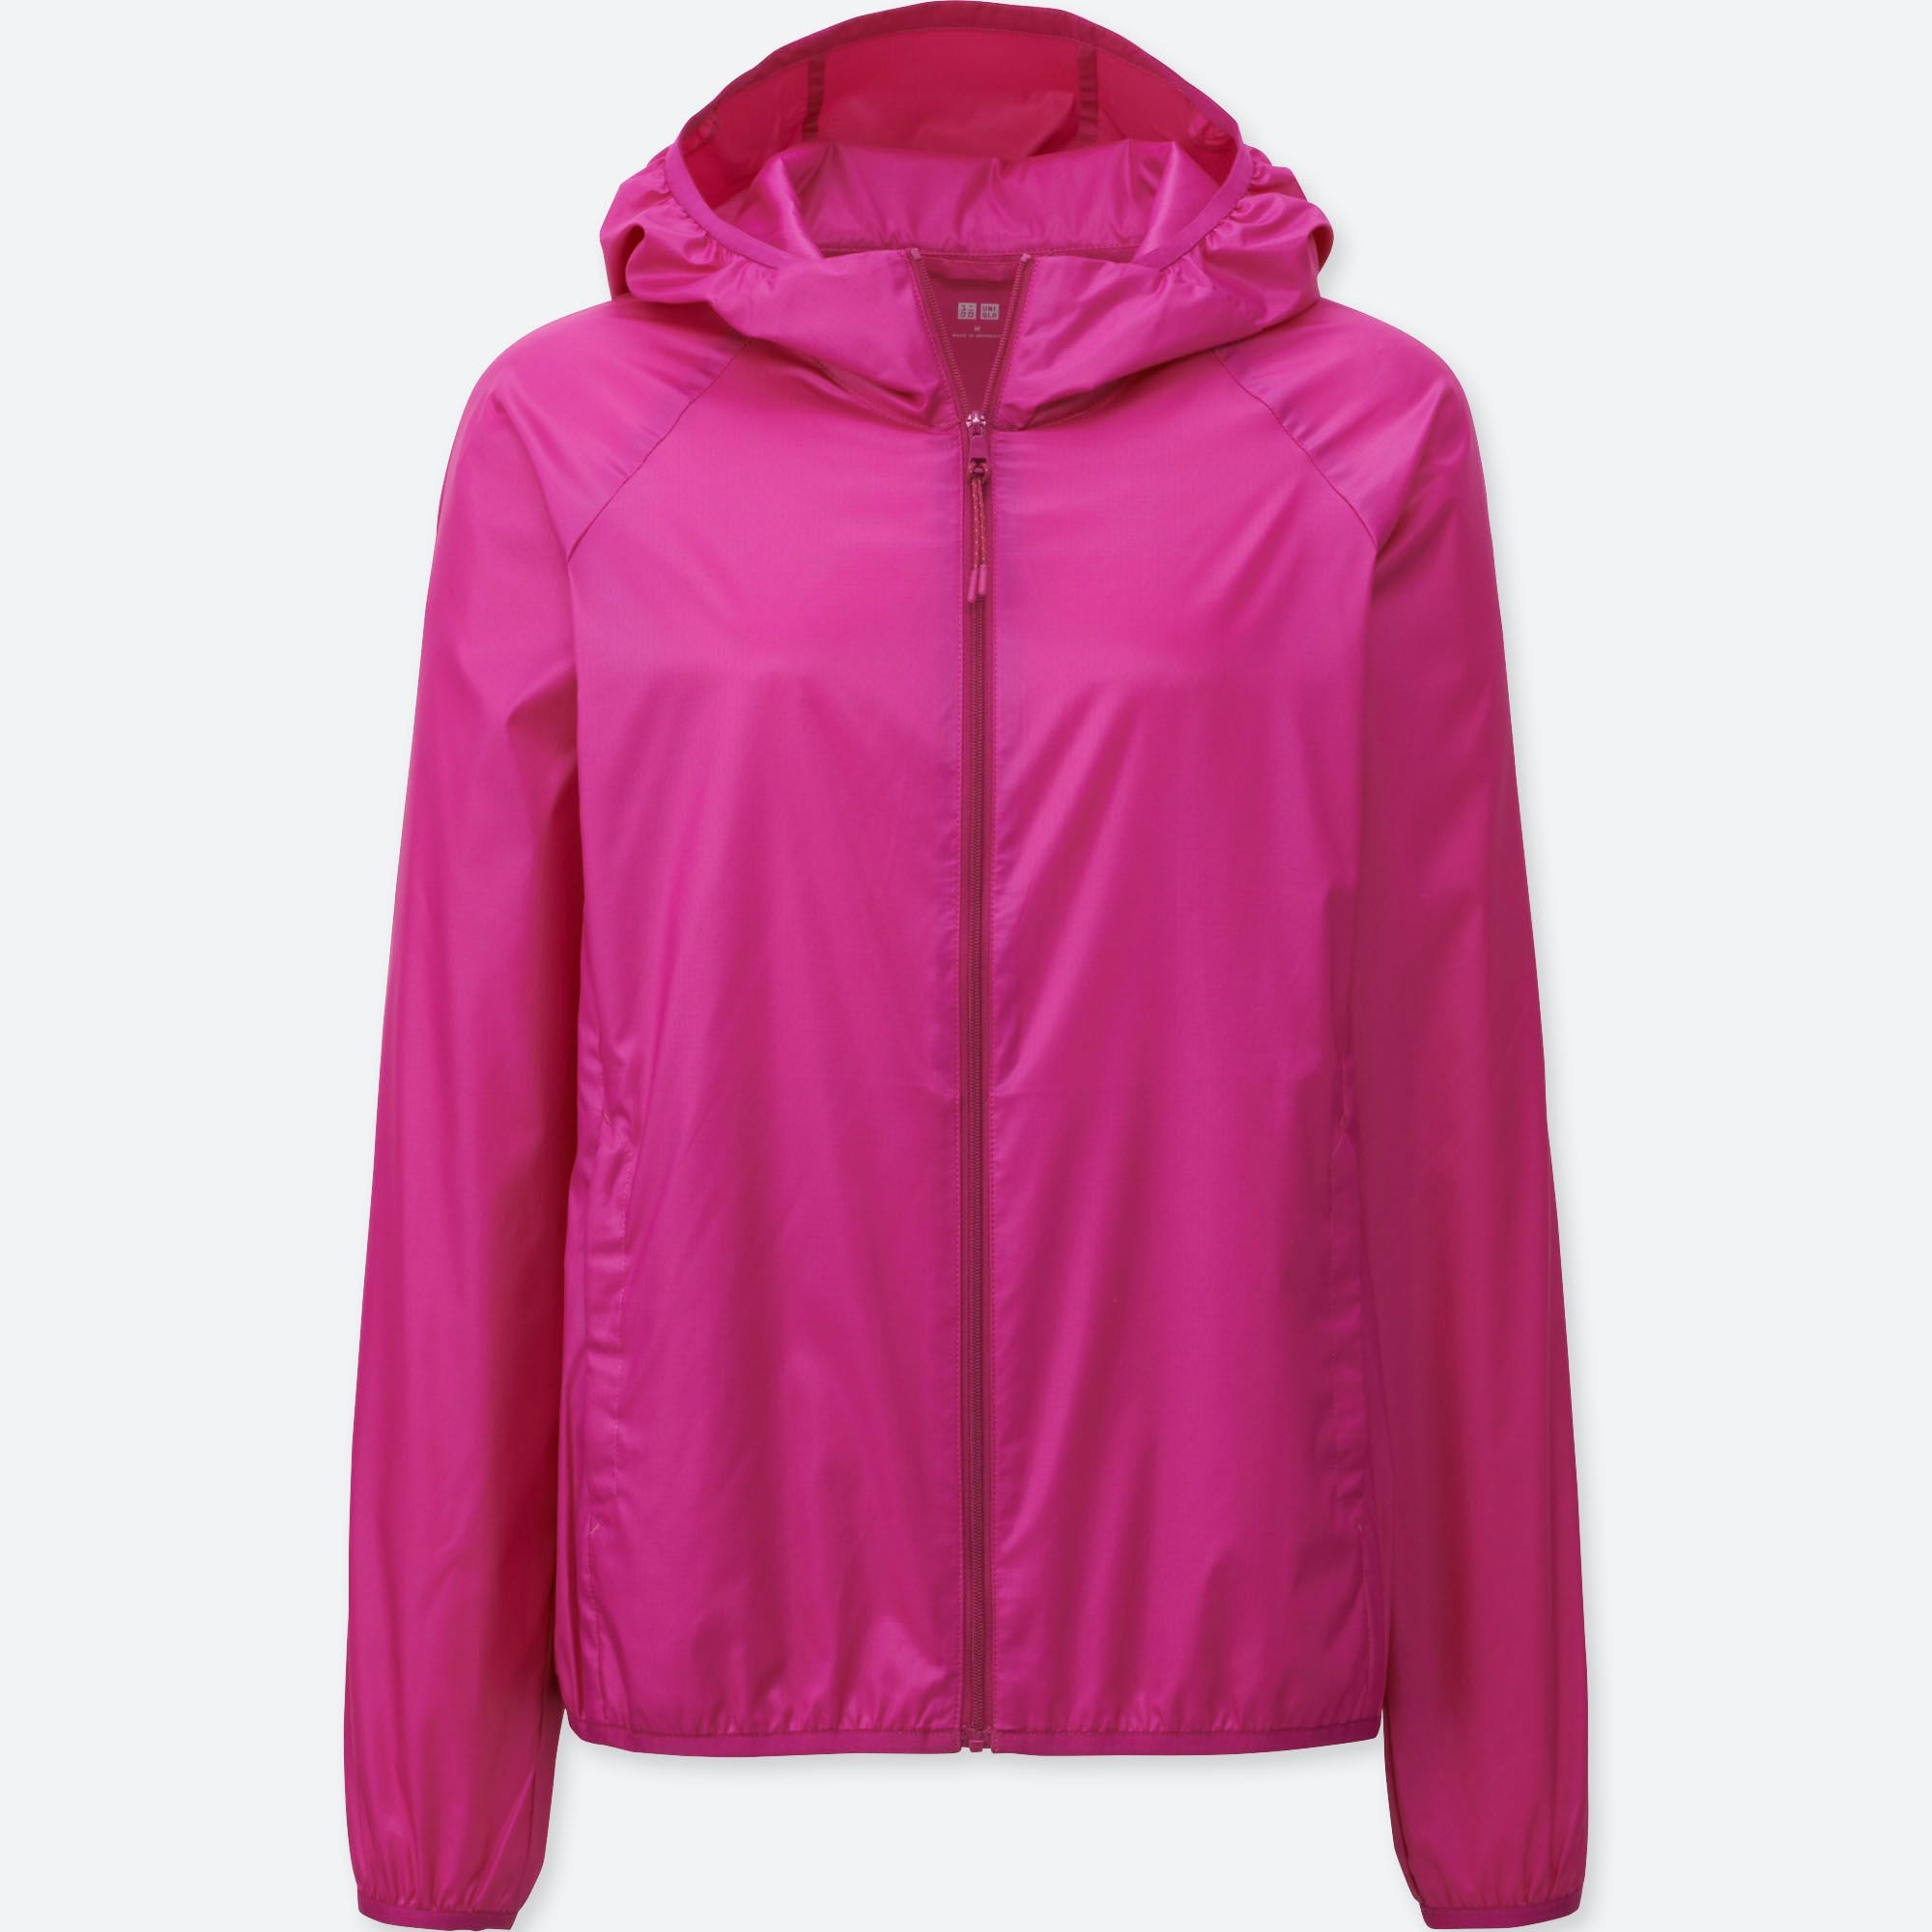 Pink, X-Large Women's Stylish Long Light Weight Waterproof Rain Coat with Hood